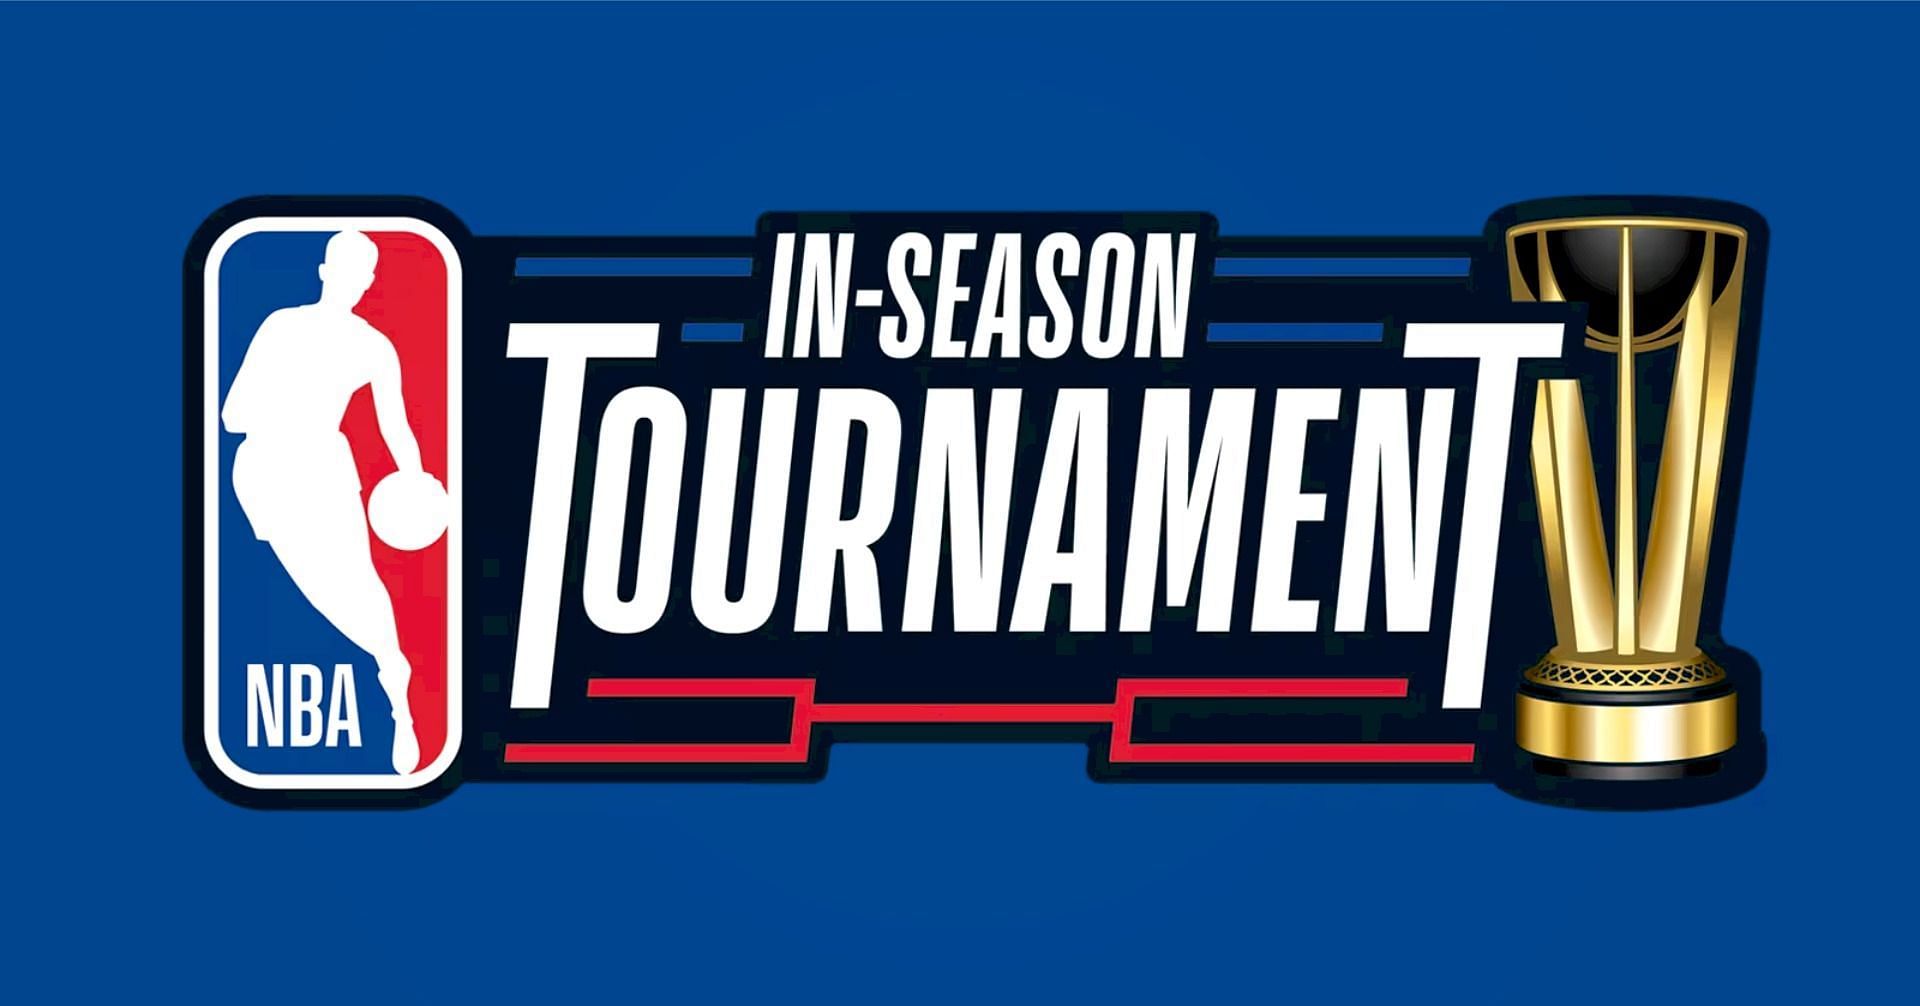 NBA In-Season Tournament promotional graphic